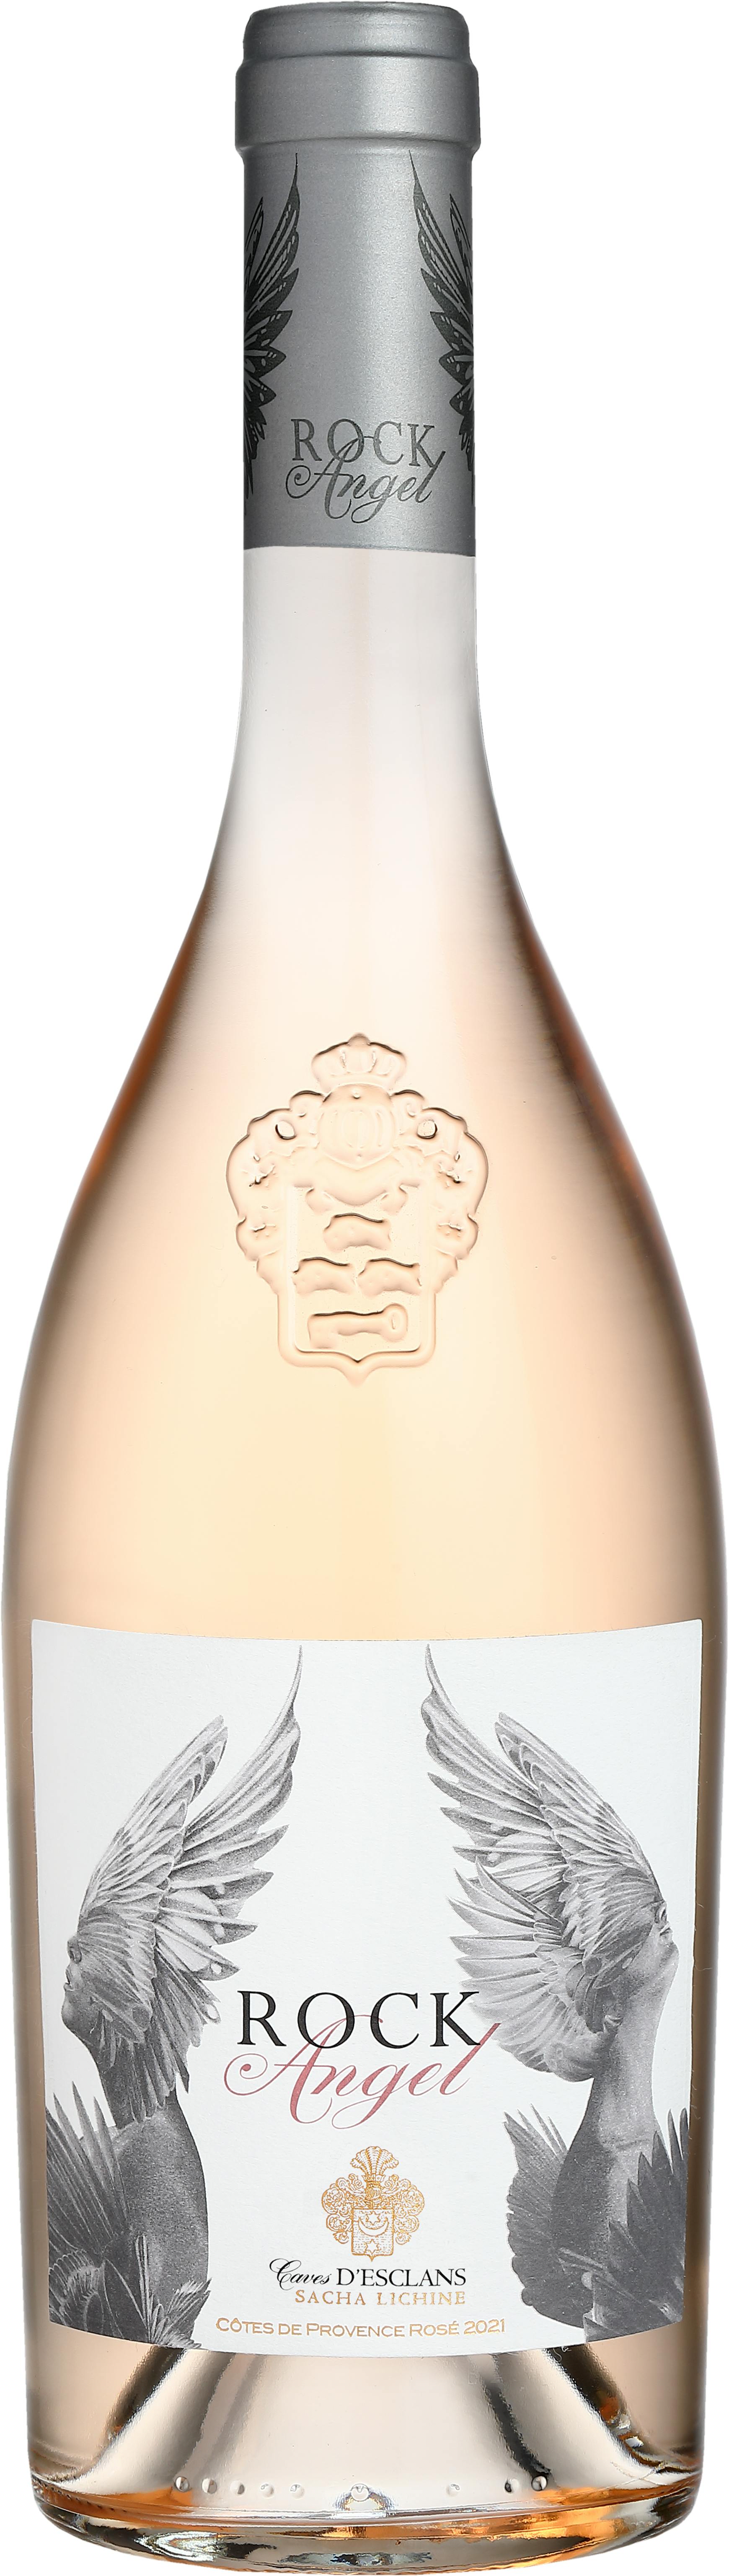 Rosé Wine - Vine Republic